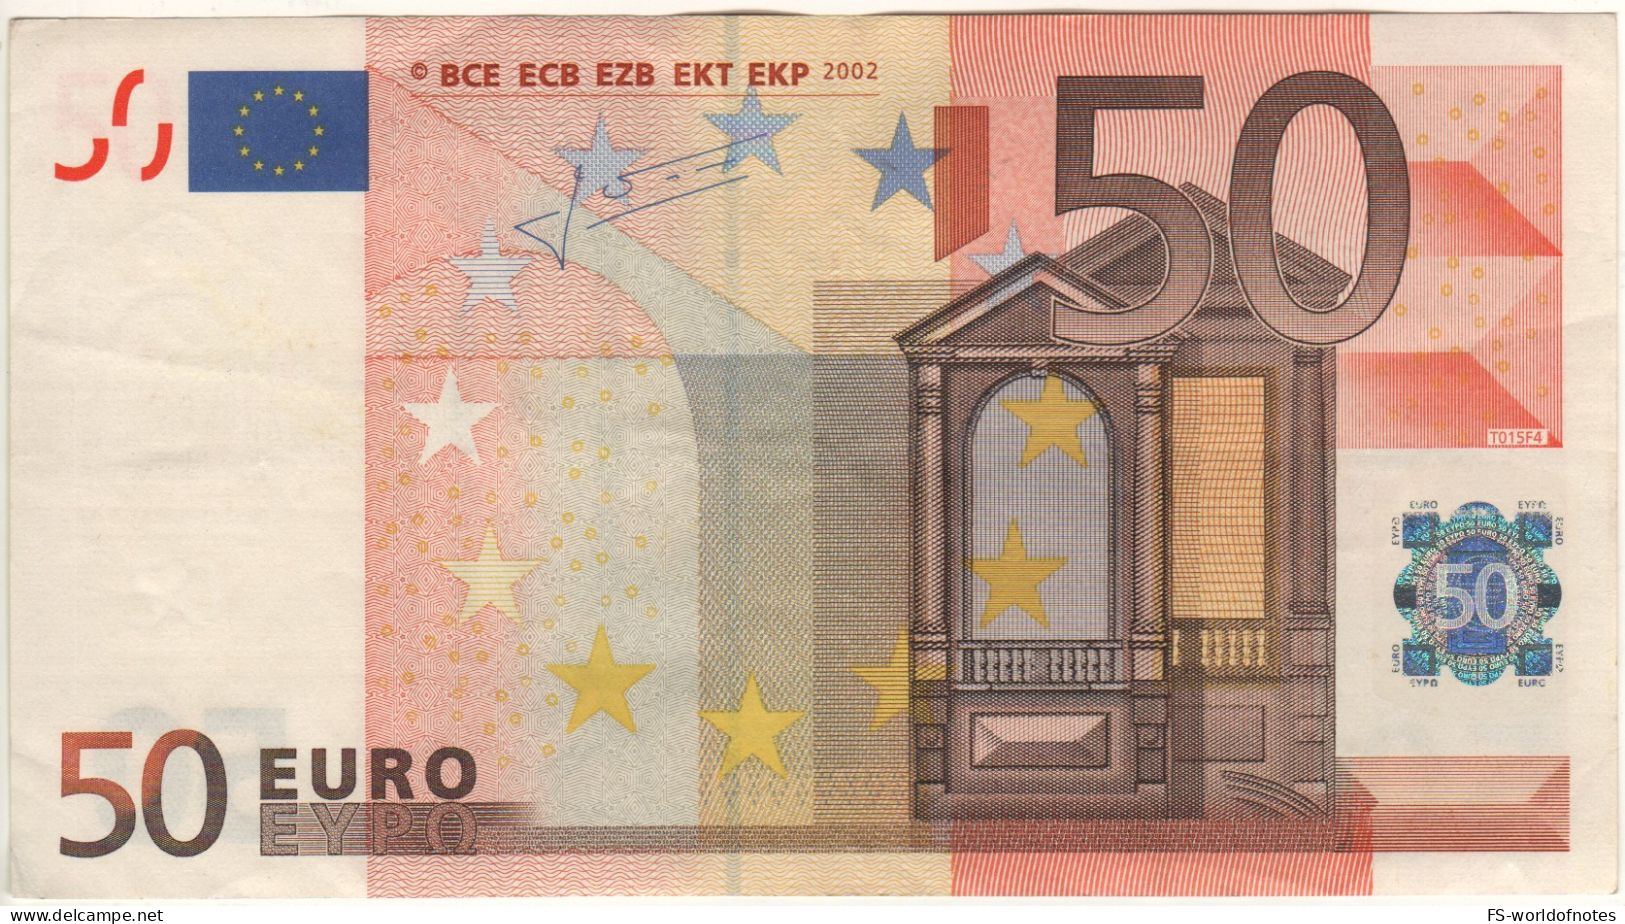 50 Euro   Z  "Belgium - Trichet    T015F4" - 50 Euro